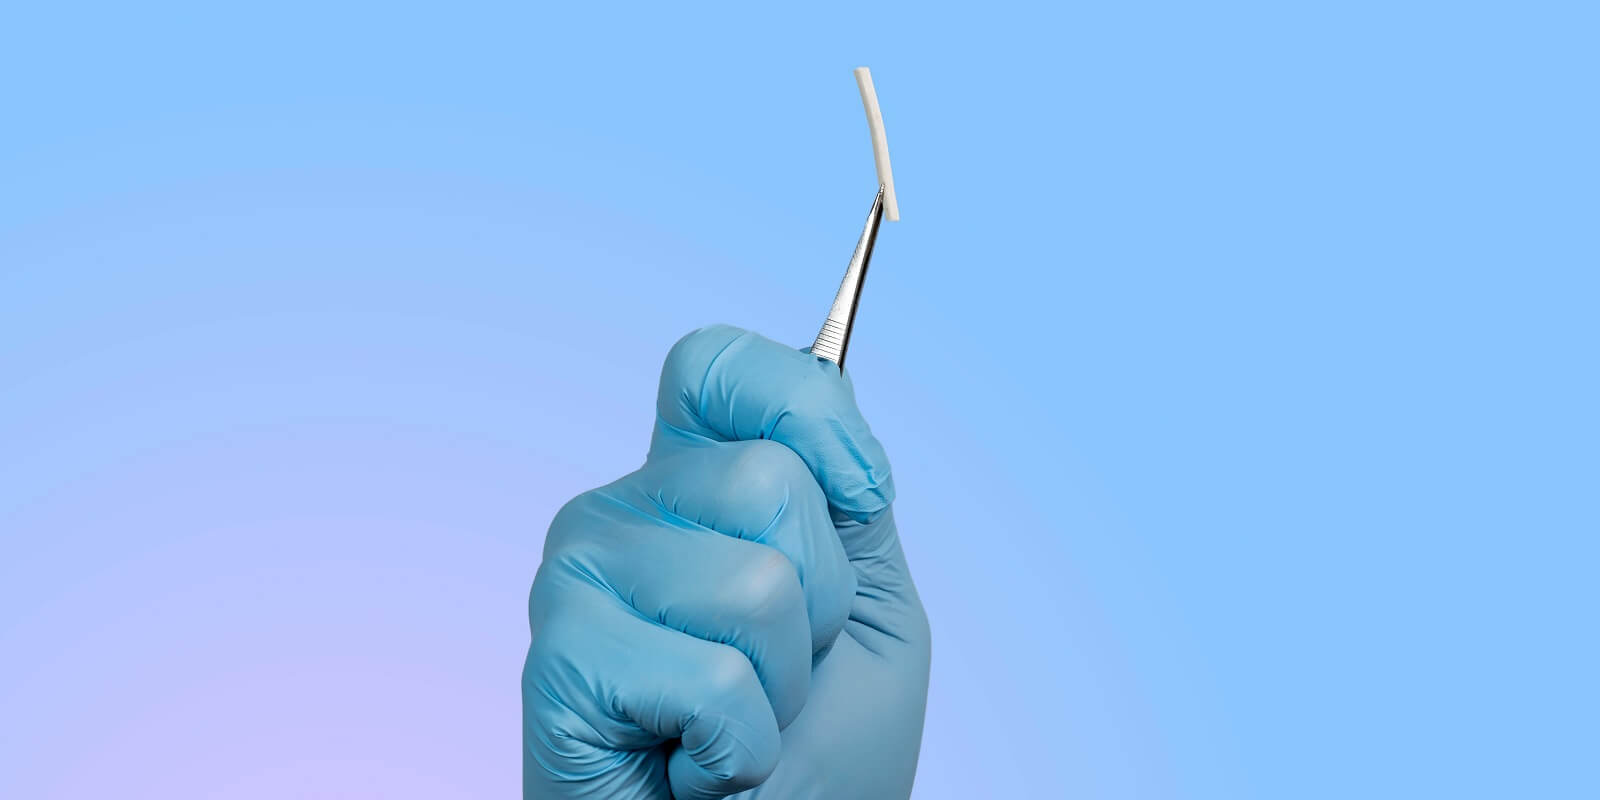 NC Gynocologist a hormonal implant with tweezers